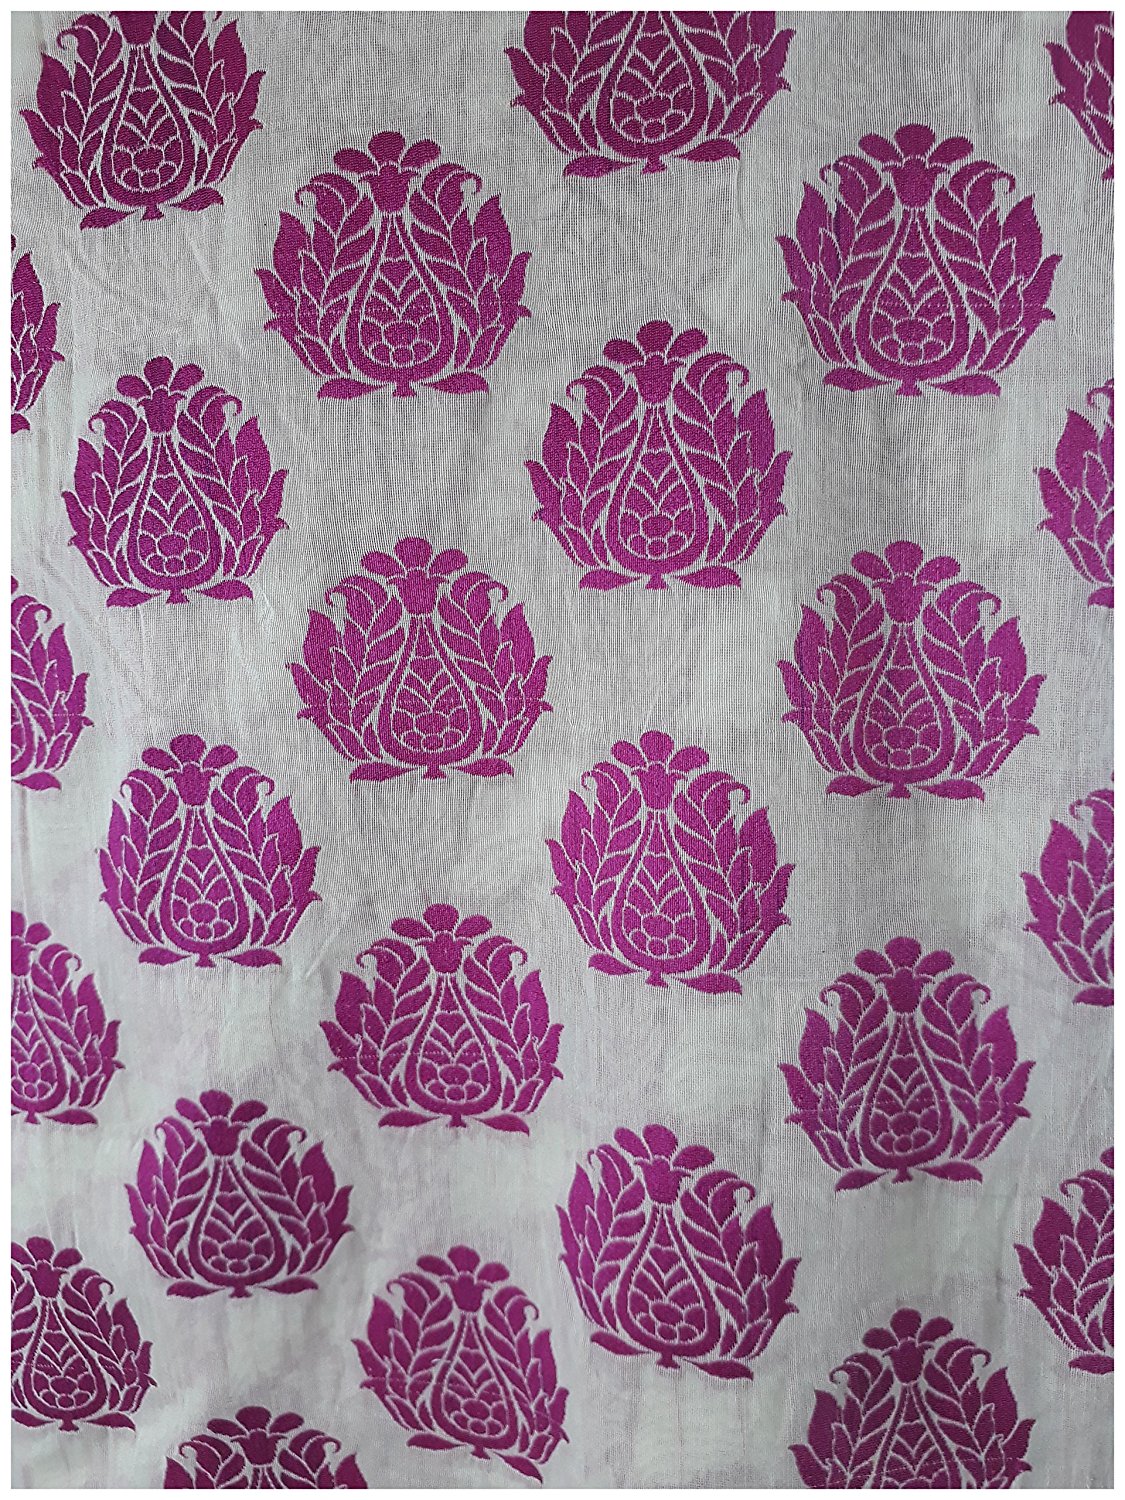 blouse fabric online shopping india kurti fabric online Woven Polycotton Fauchia Pink, Rani Pink, White 46 inches Wide 8038